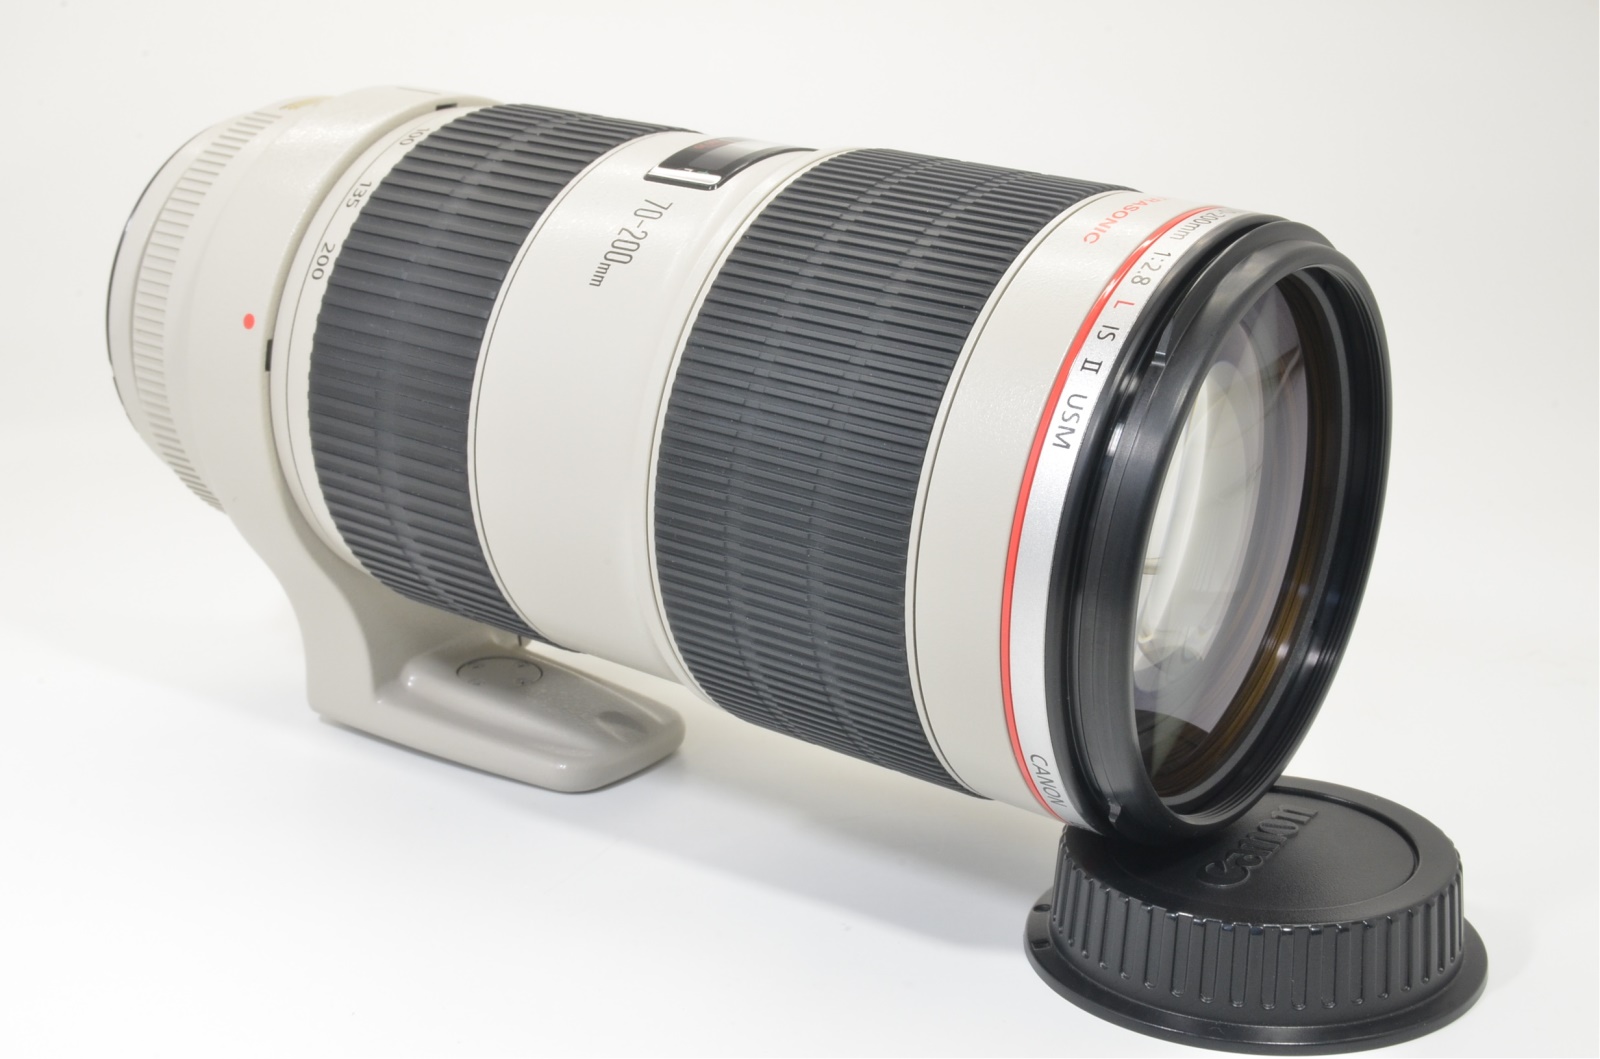 canon ef 70-200mm f/2.8 l is ii usm ultrasonic lens shooting tested